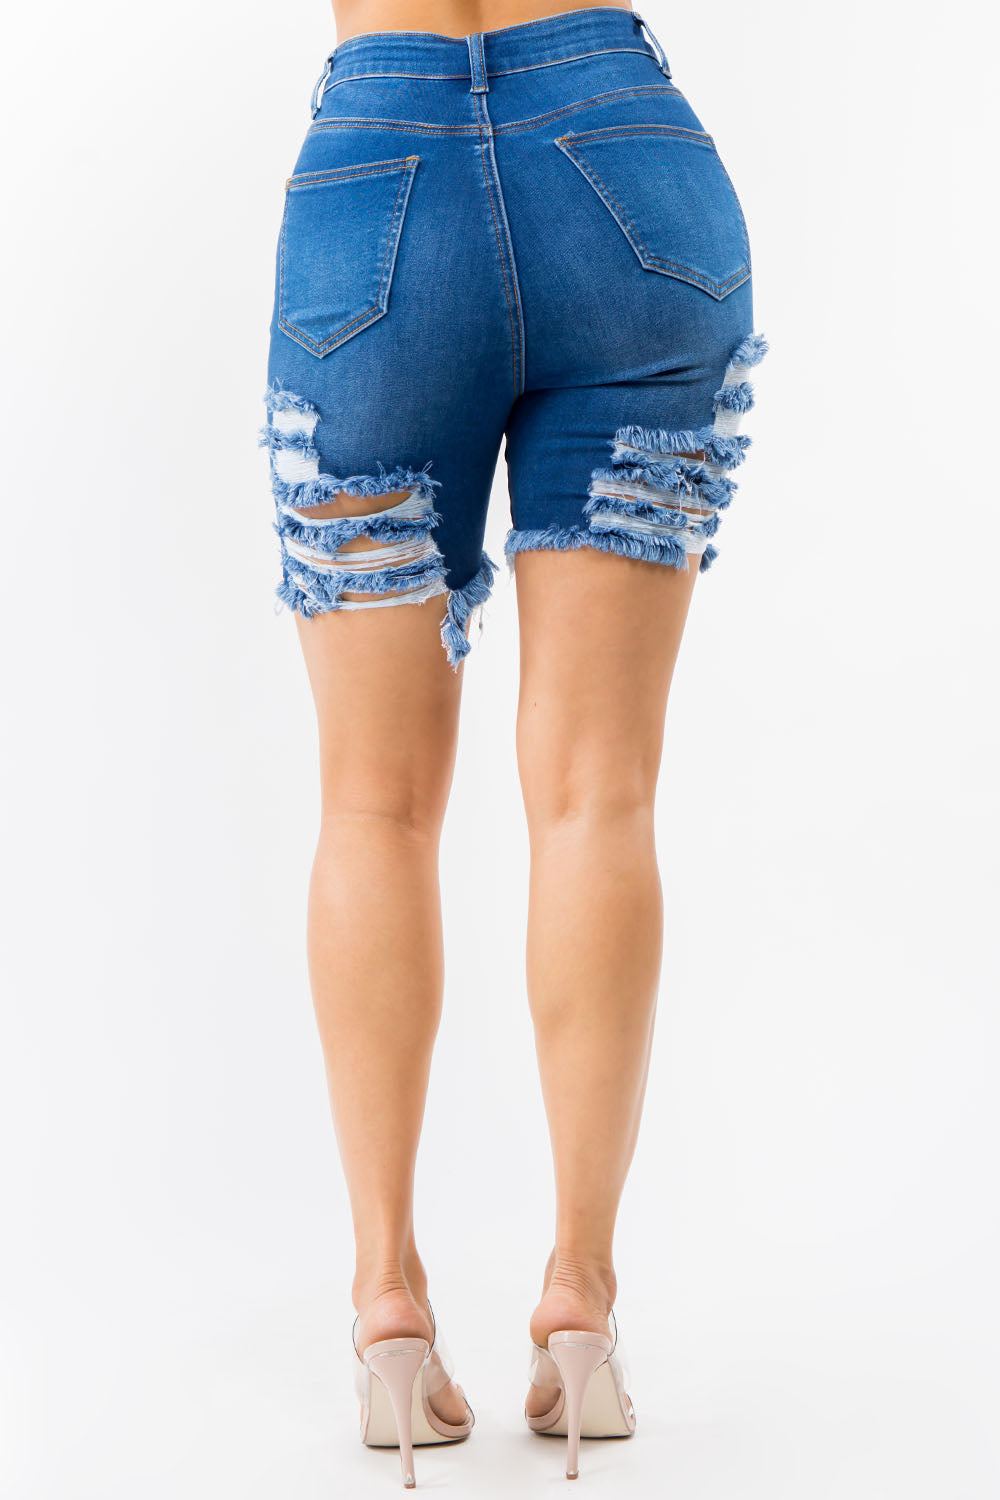 Premium Modal Fabric High Waist Distressed Shorts